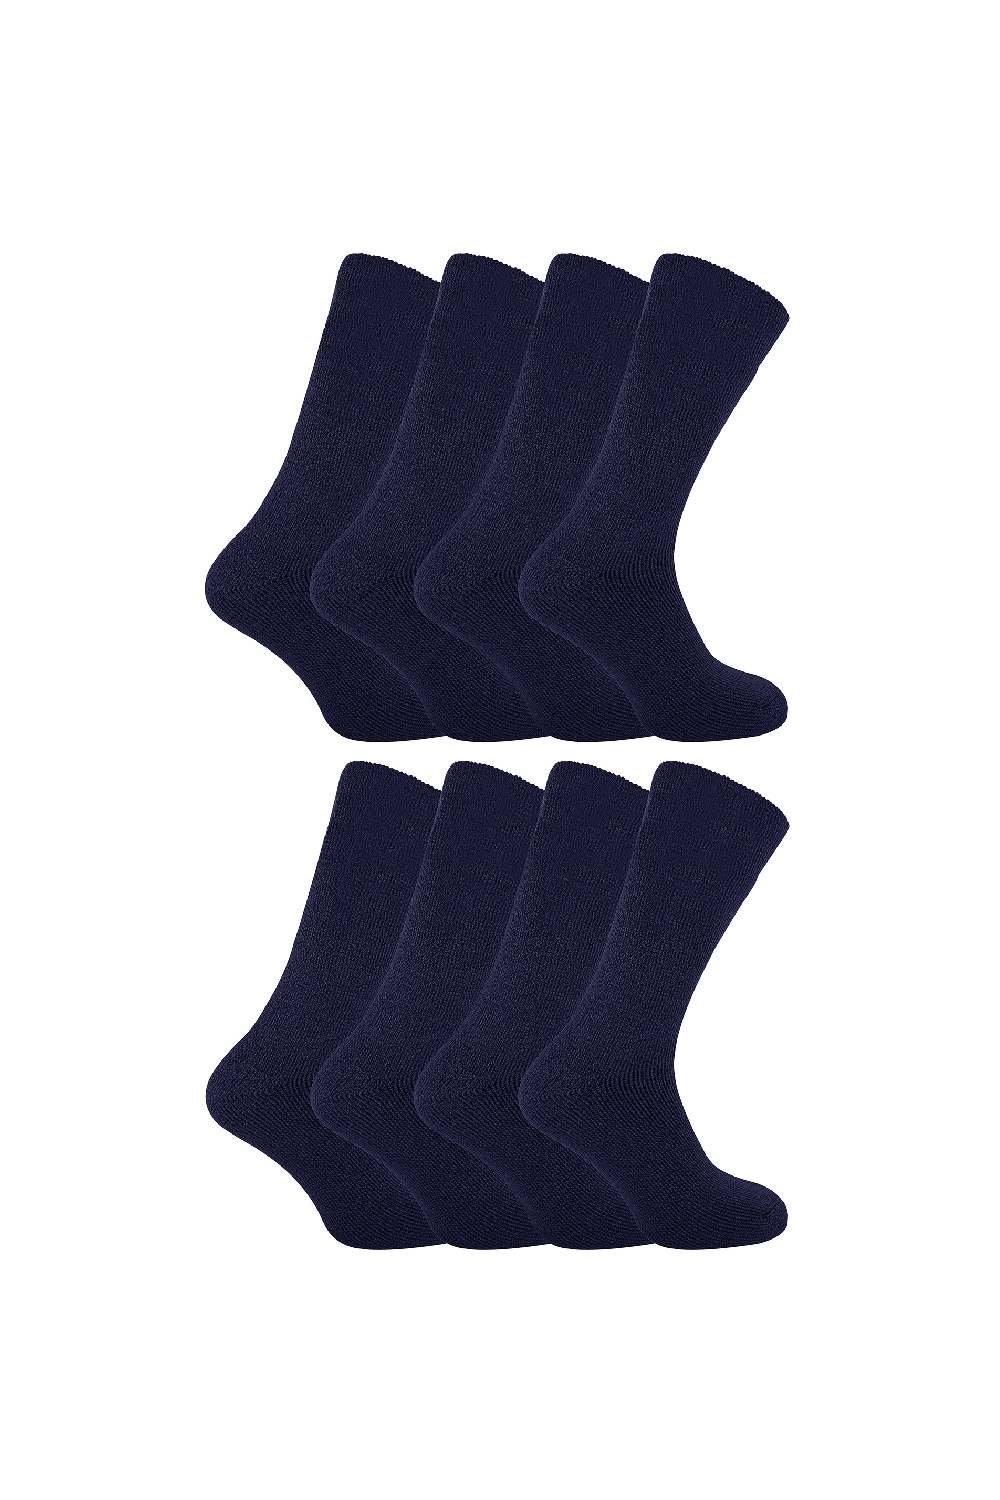 8 Pack Thermal Sleep Socks - Soft & Comfortable Warm Bed Socks